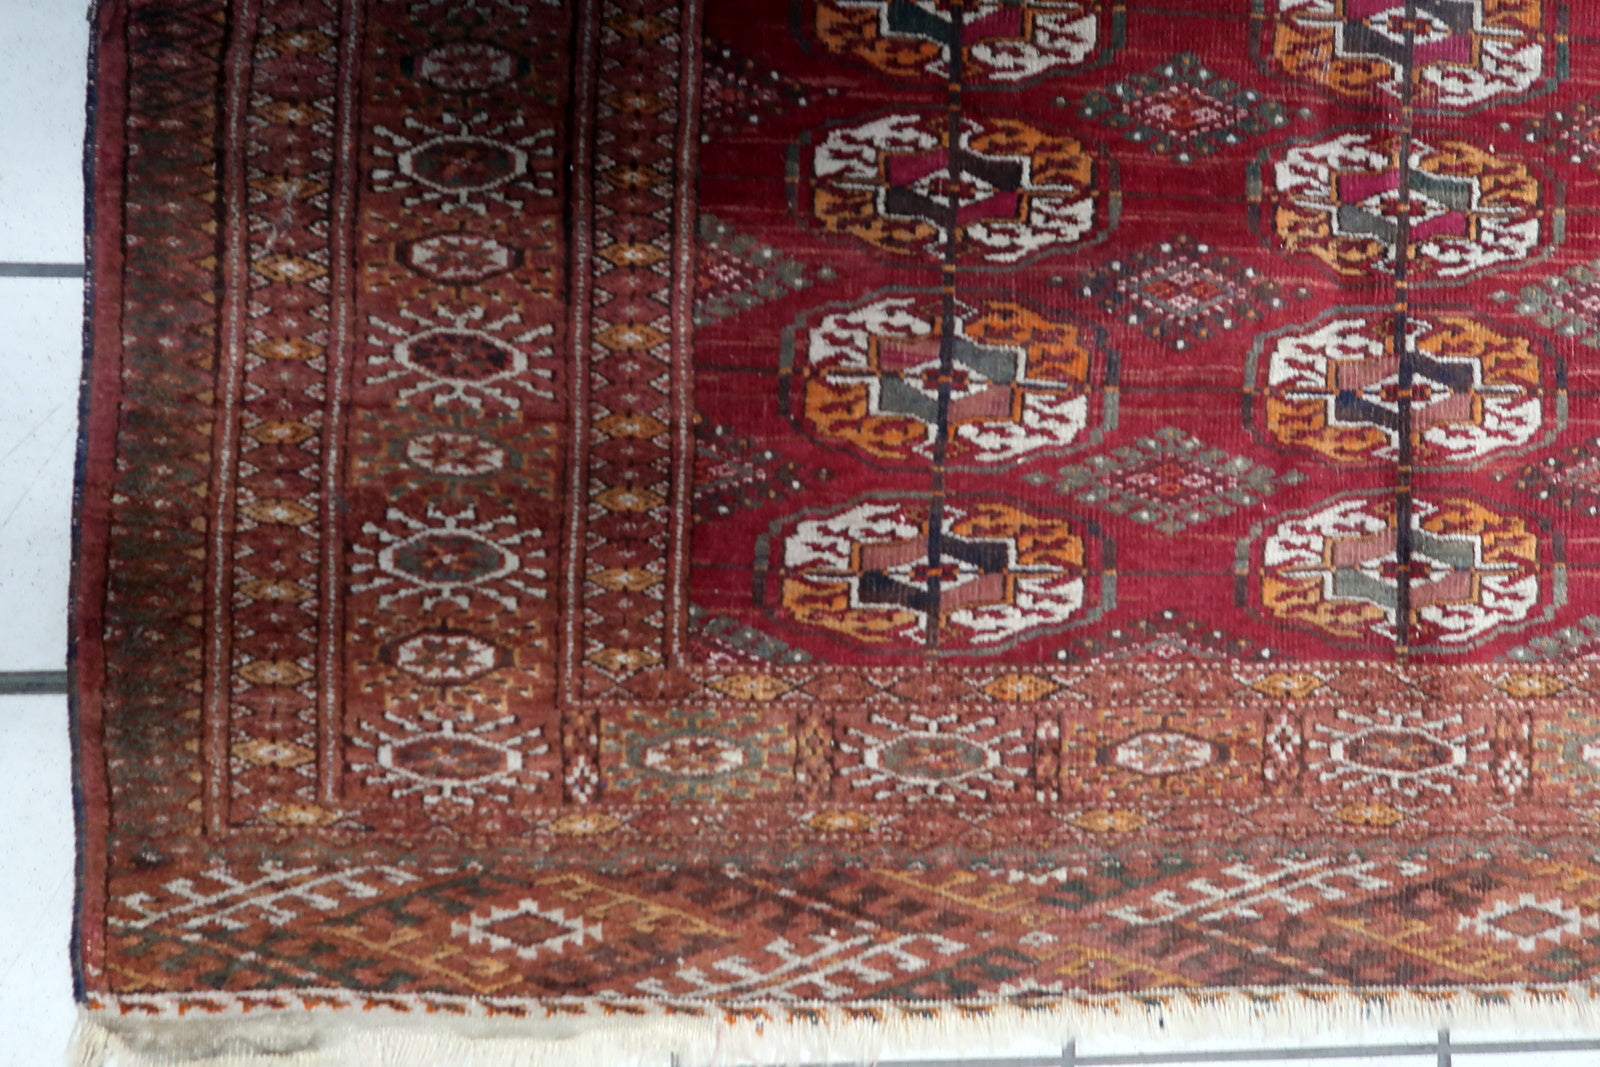 Close-up of intricate geometric pattern on the Handmade Vintage Uzbek Bukhara Rug